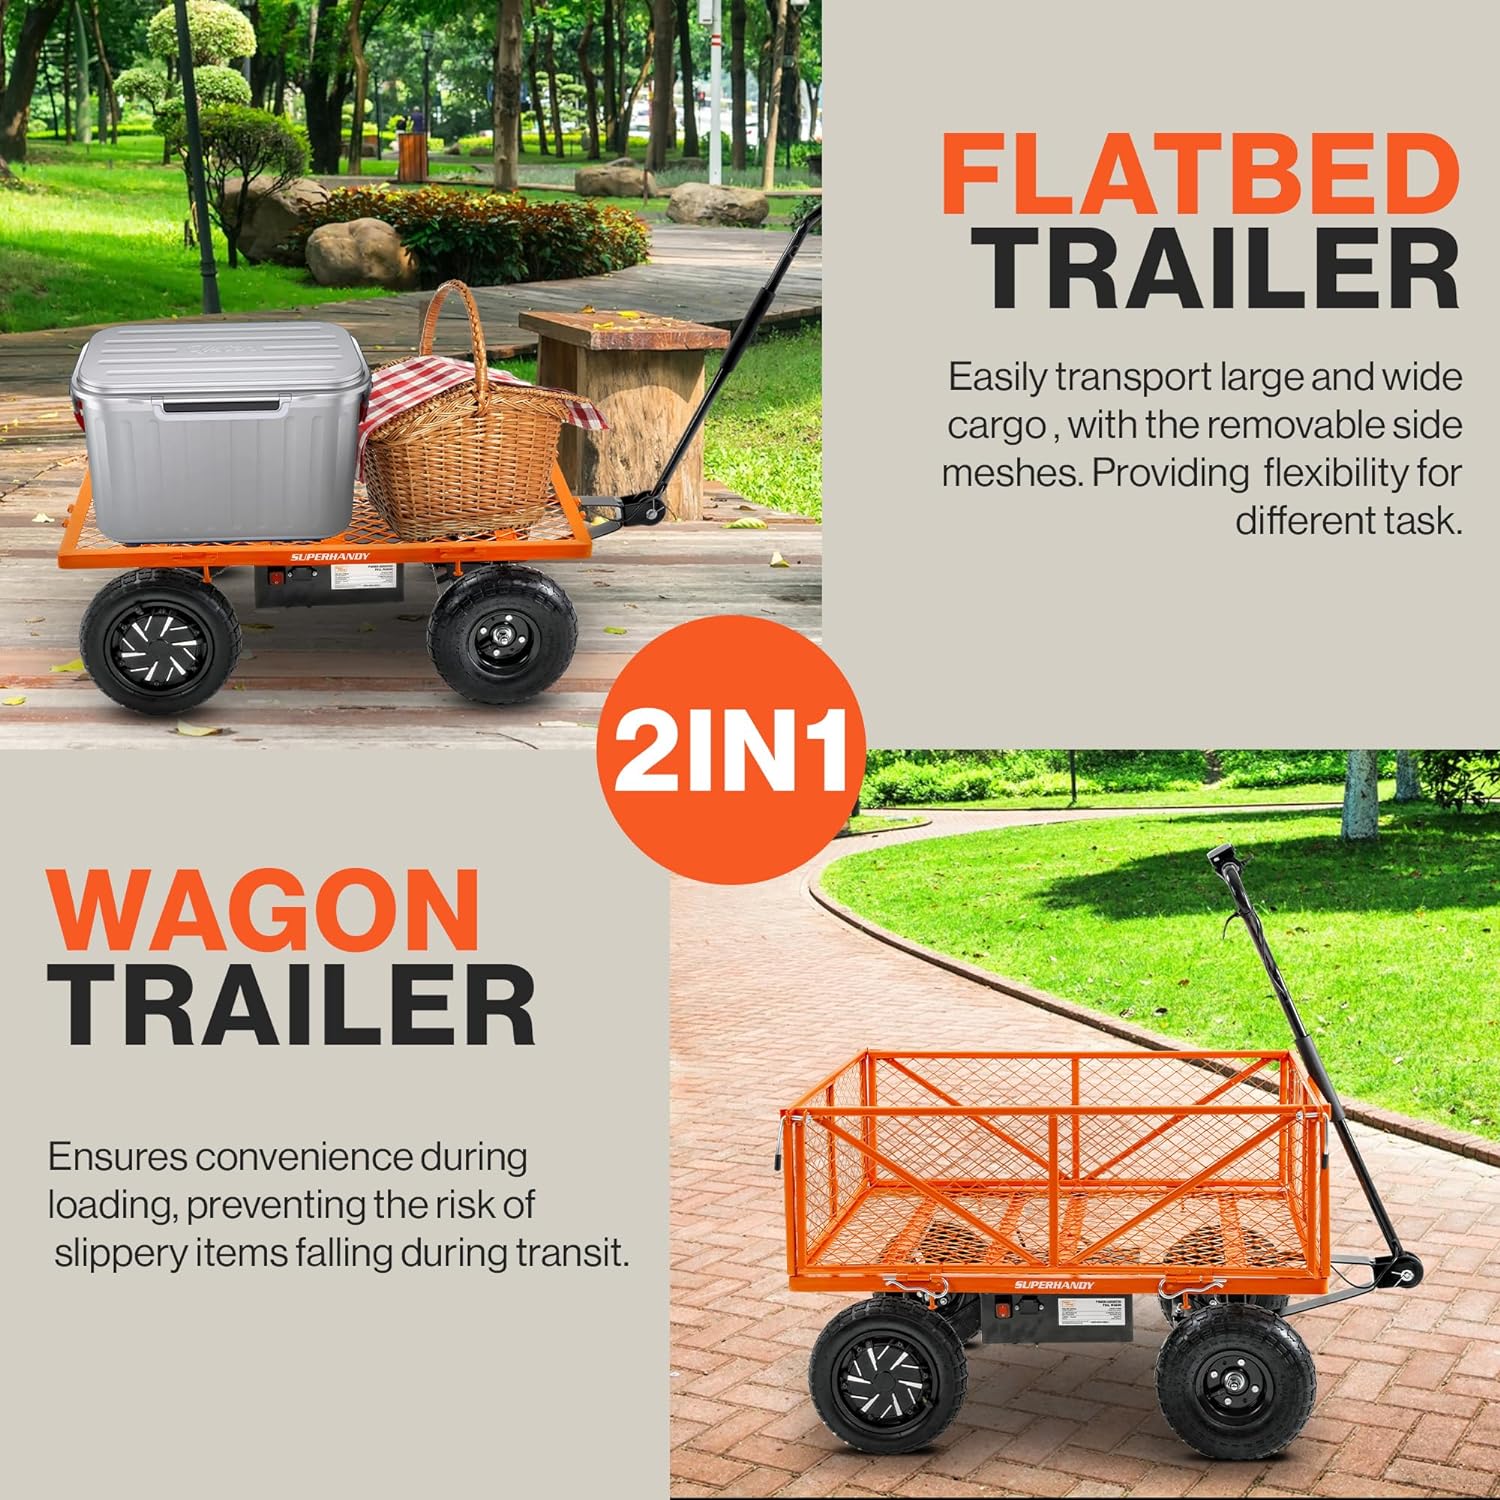 SuperHandy Electric Garden Cart Pro - 5.7 Cu Ft, Convertible Flatbed, 440lb Load